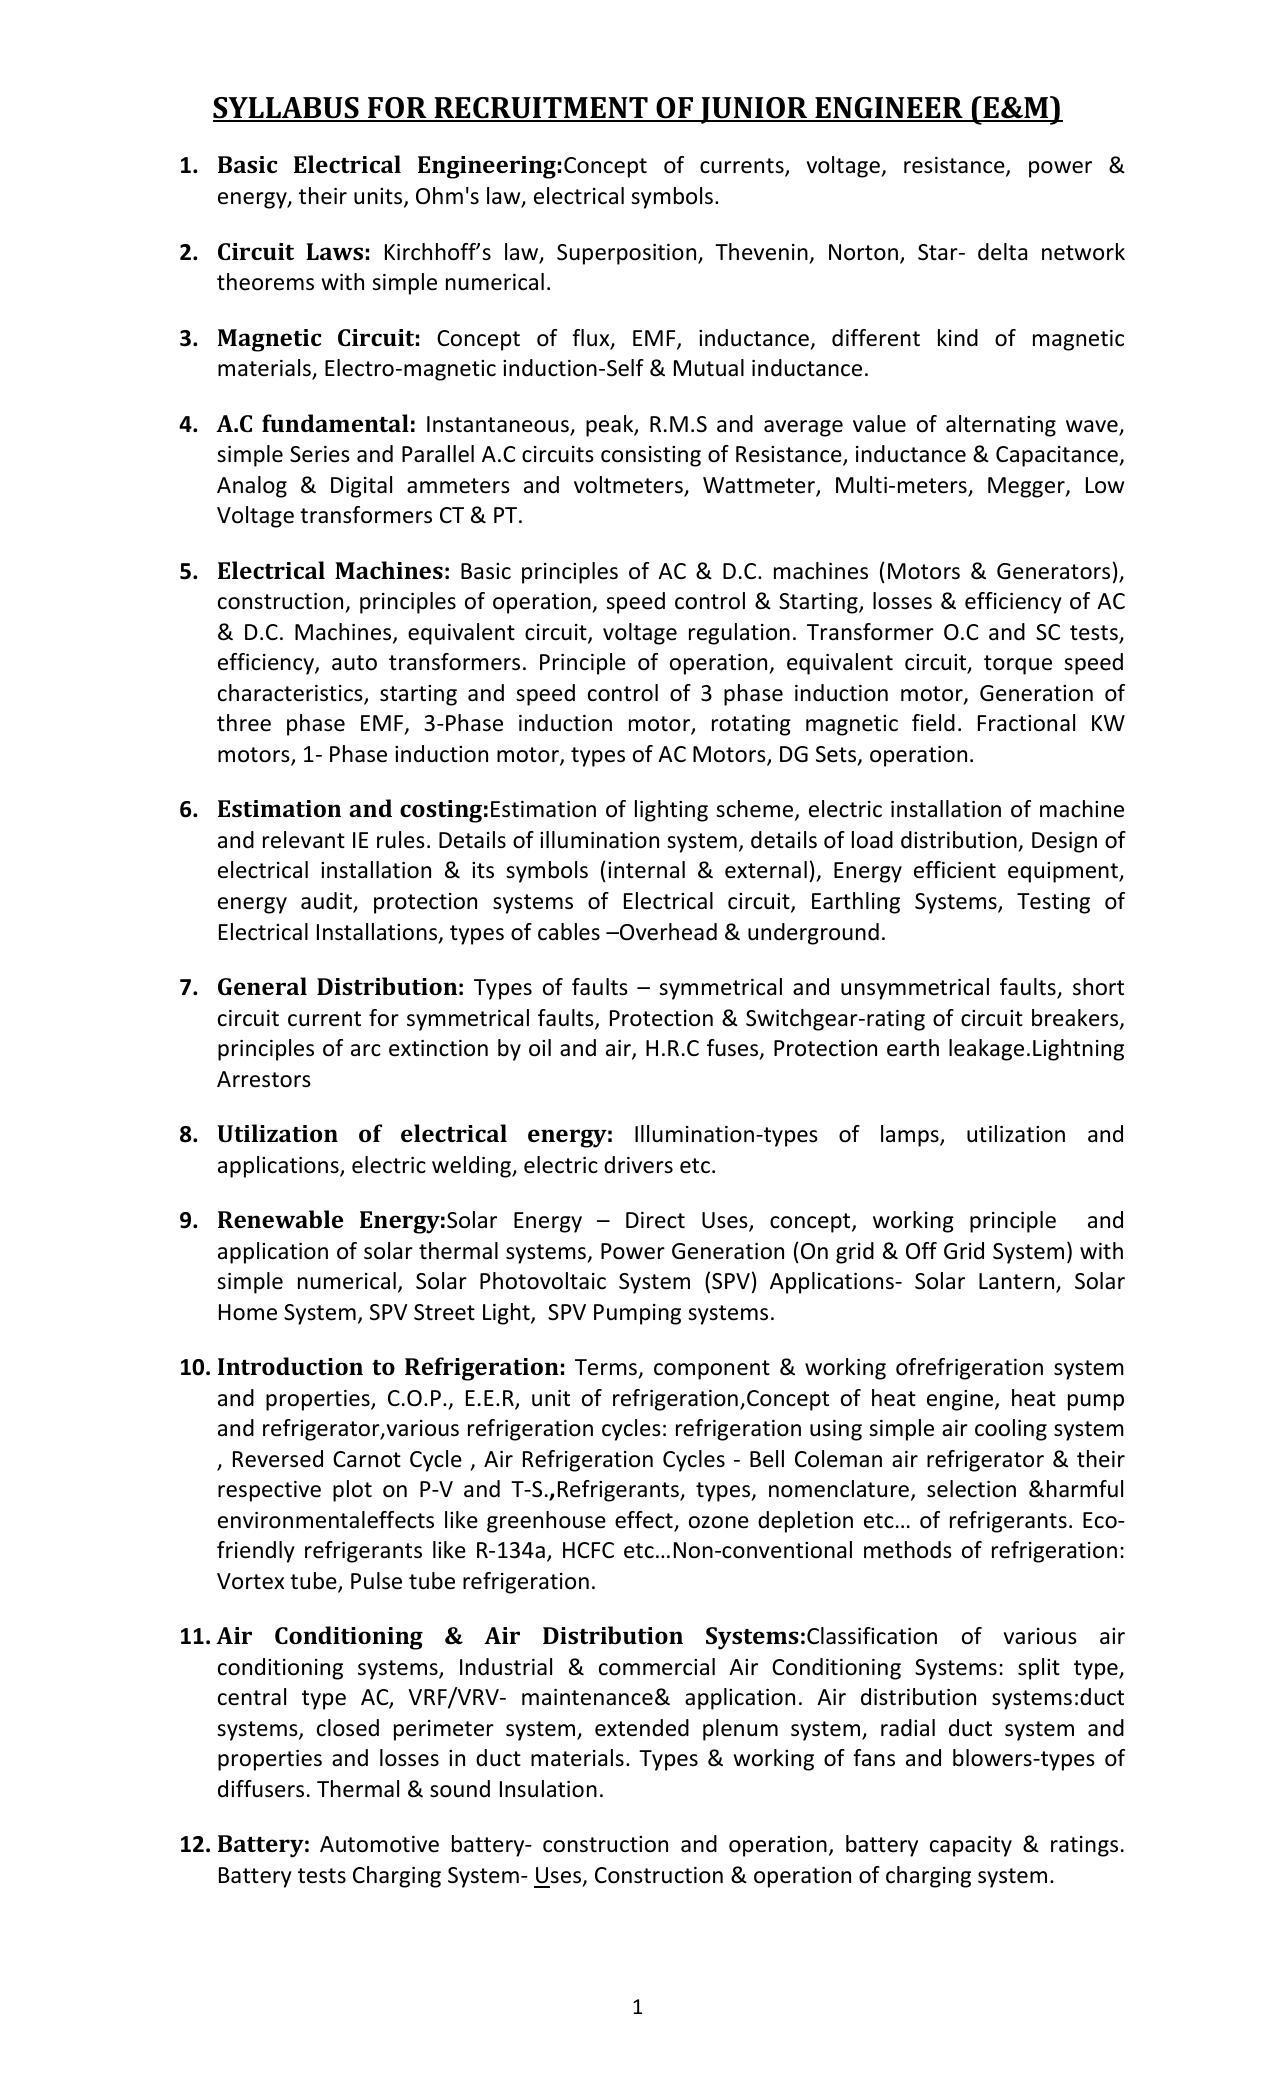 Andaman & Nicobar Administration Recruitment 2022 for 127 Various Vacancies - Page 34